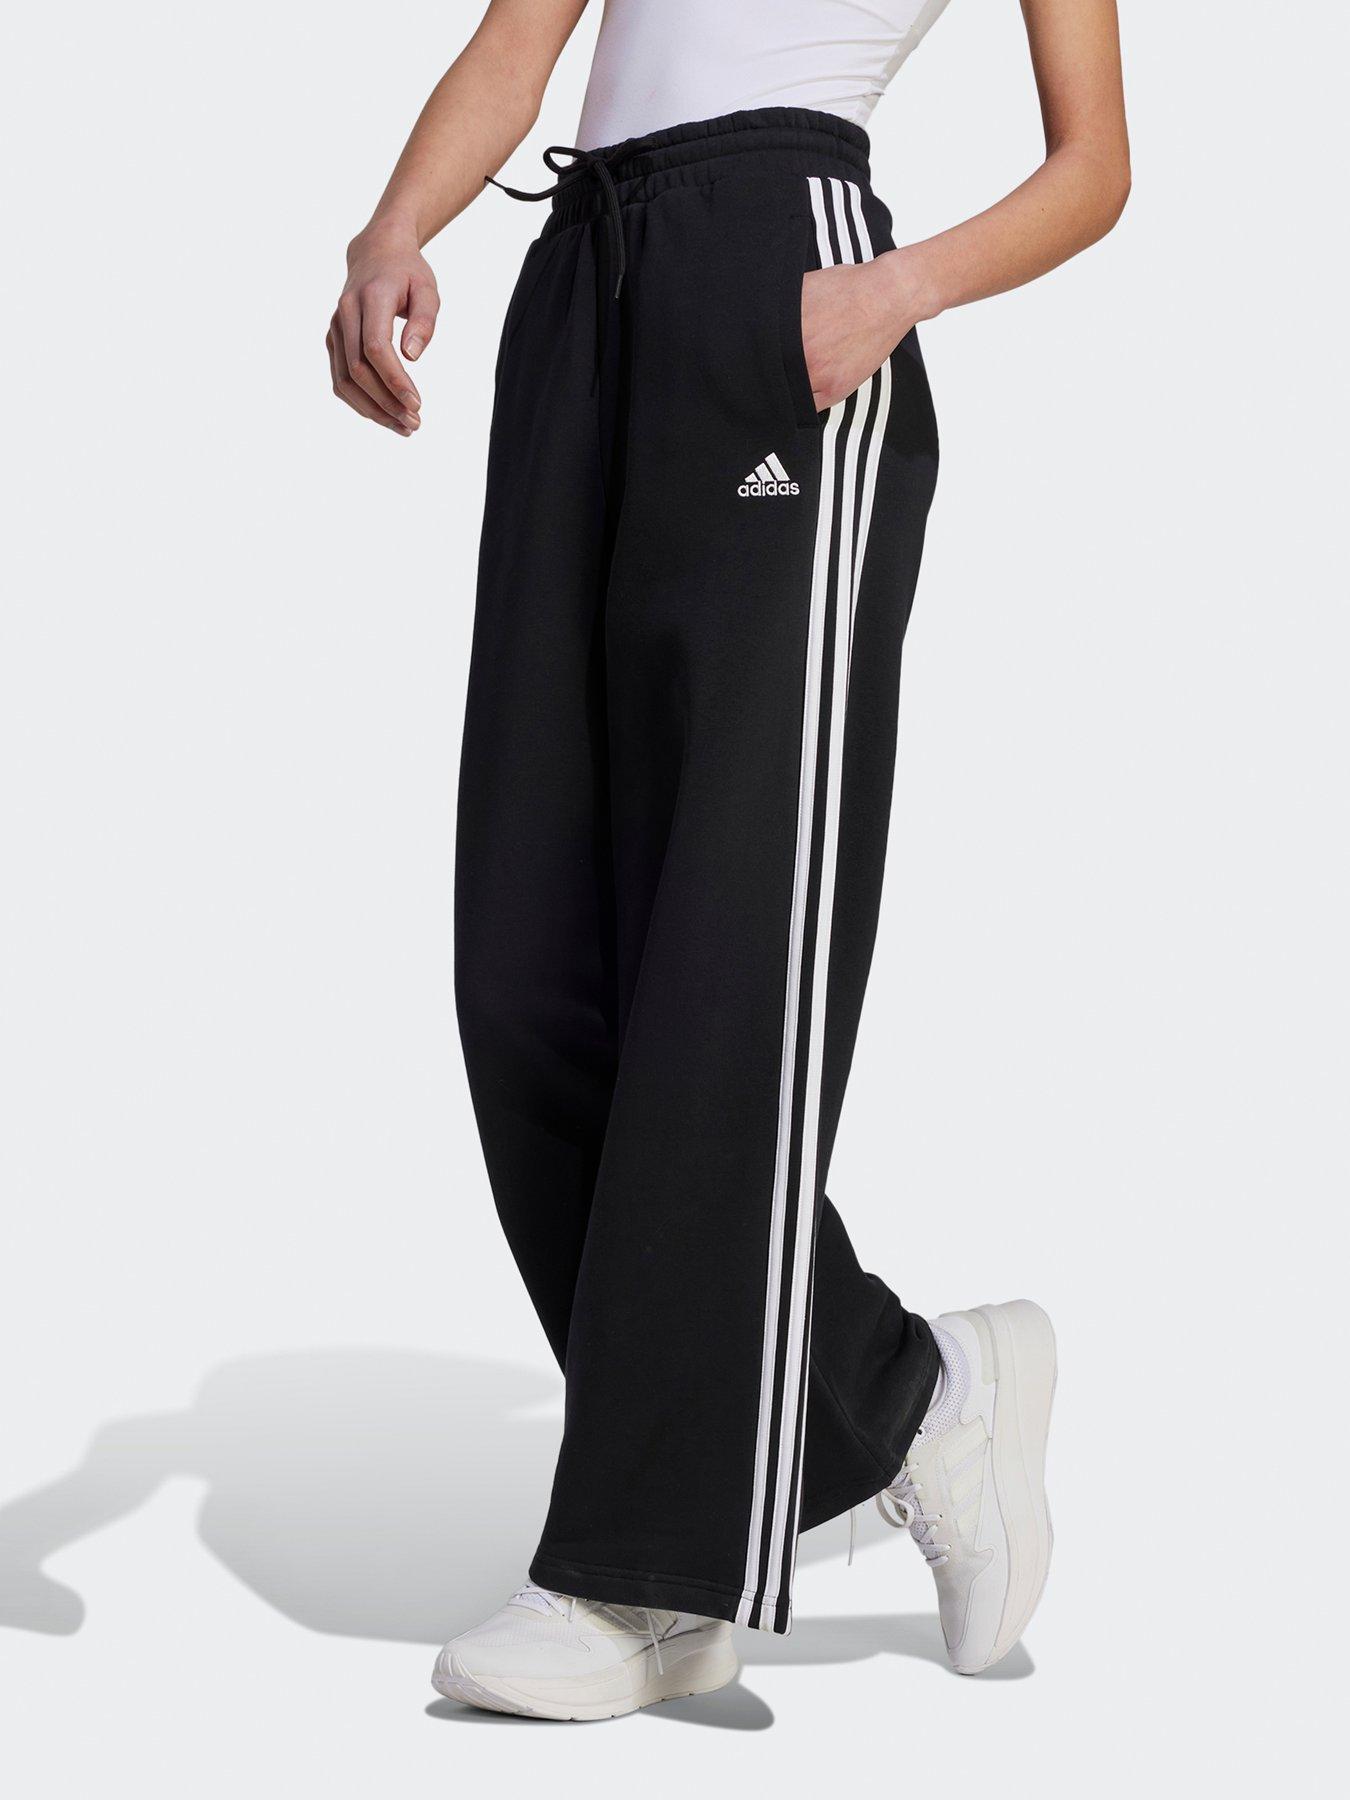 adidas Sweatpants in black/ white